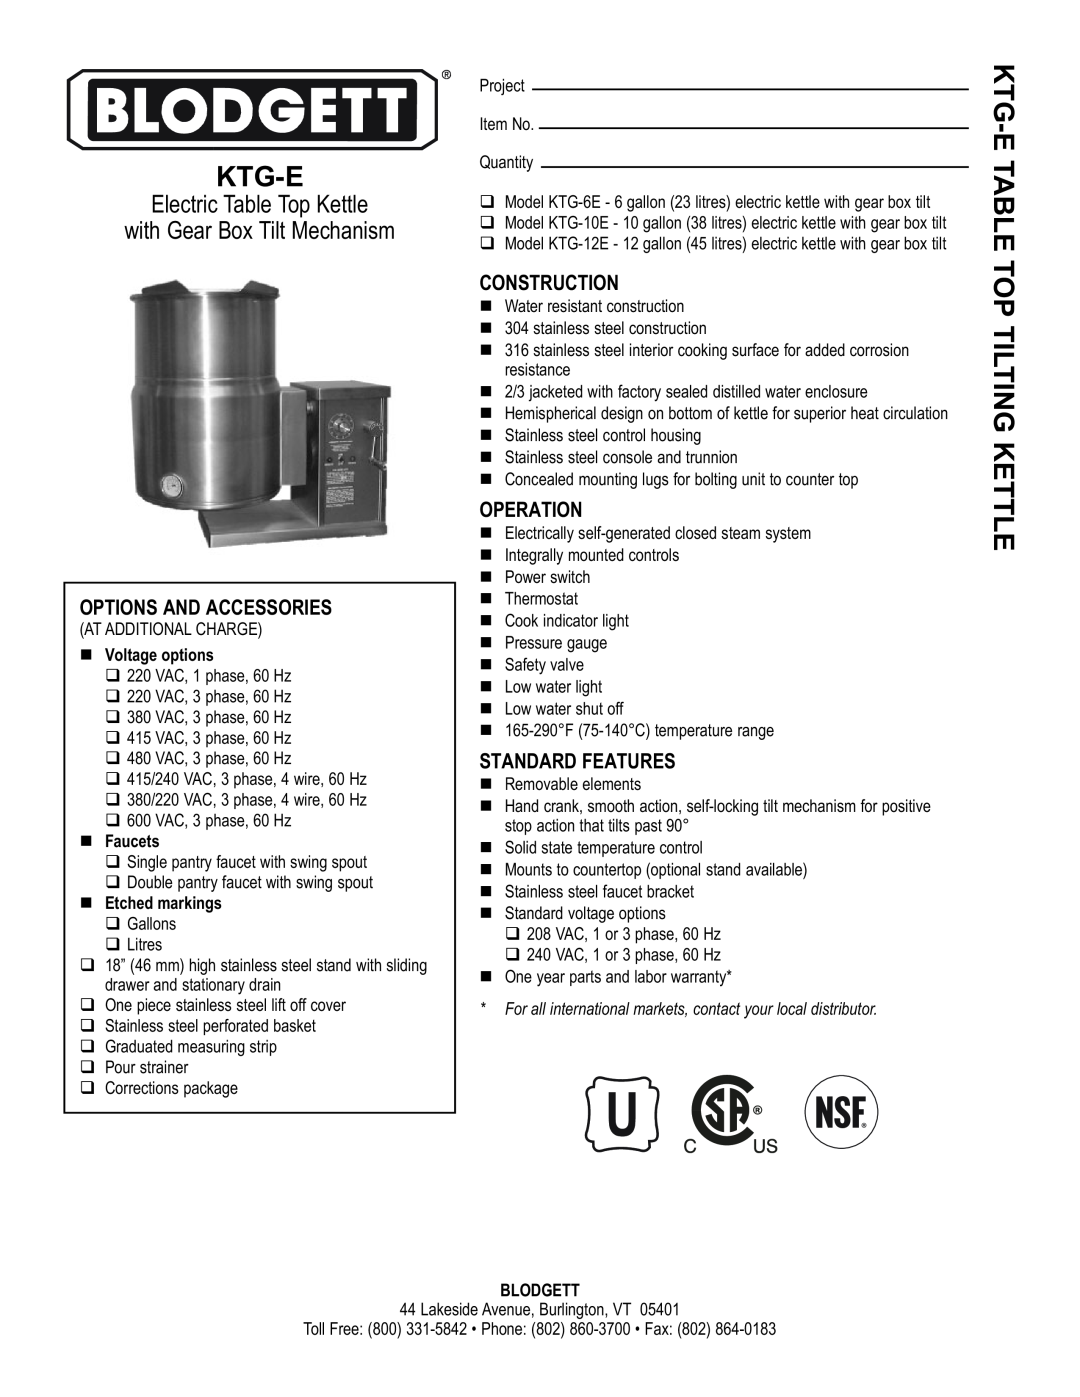 Blodgett KTG-6E warranty Ktg-Etable Top Tilting Kettle, Options And Accessories, Construction, Operation, Faucets 